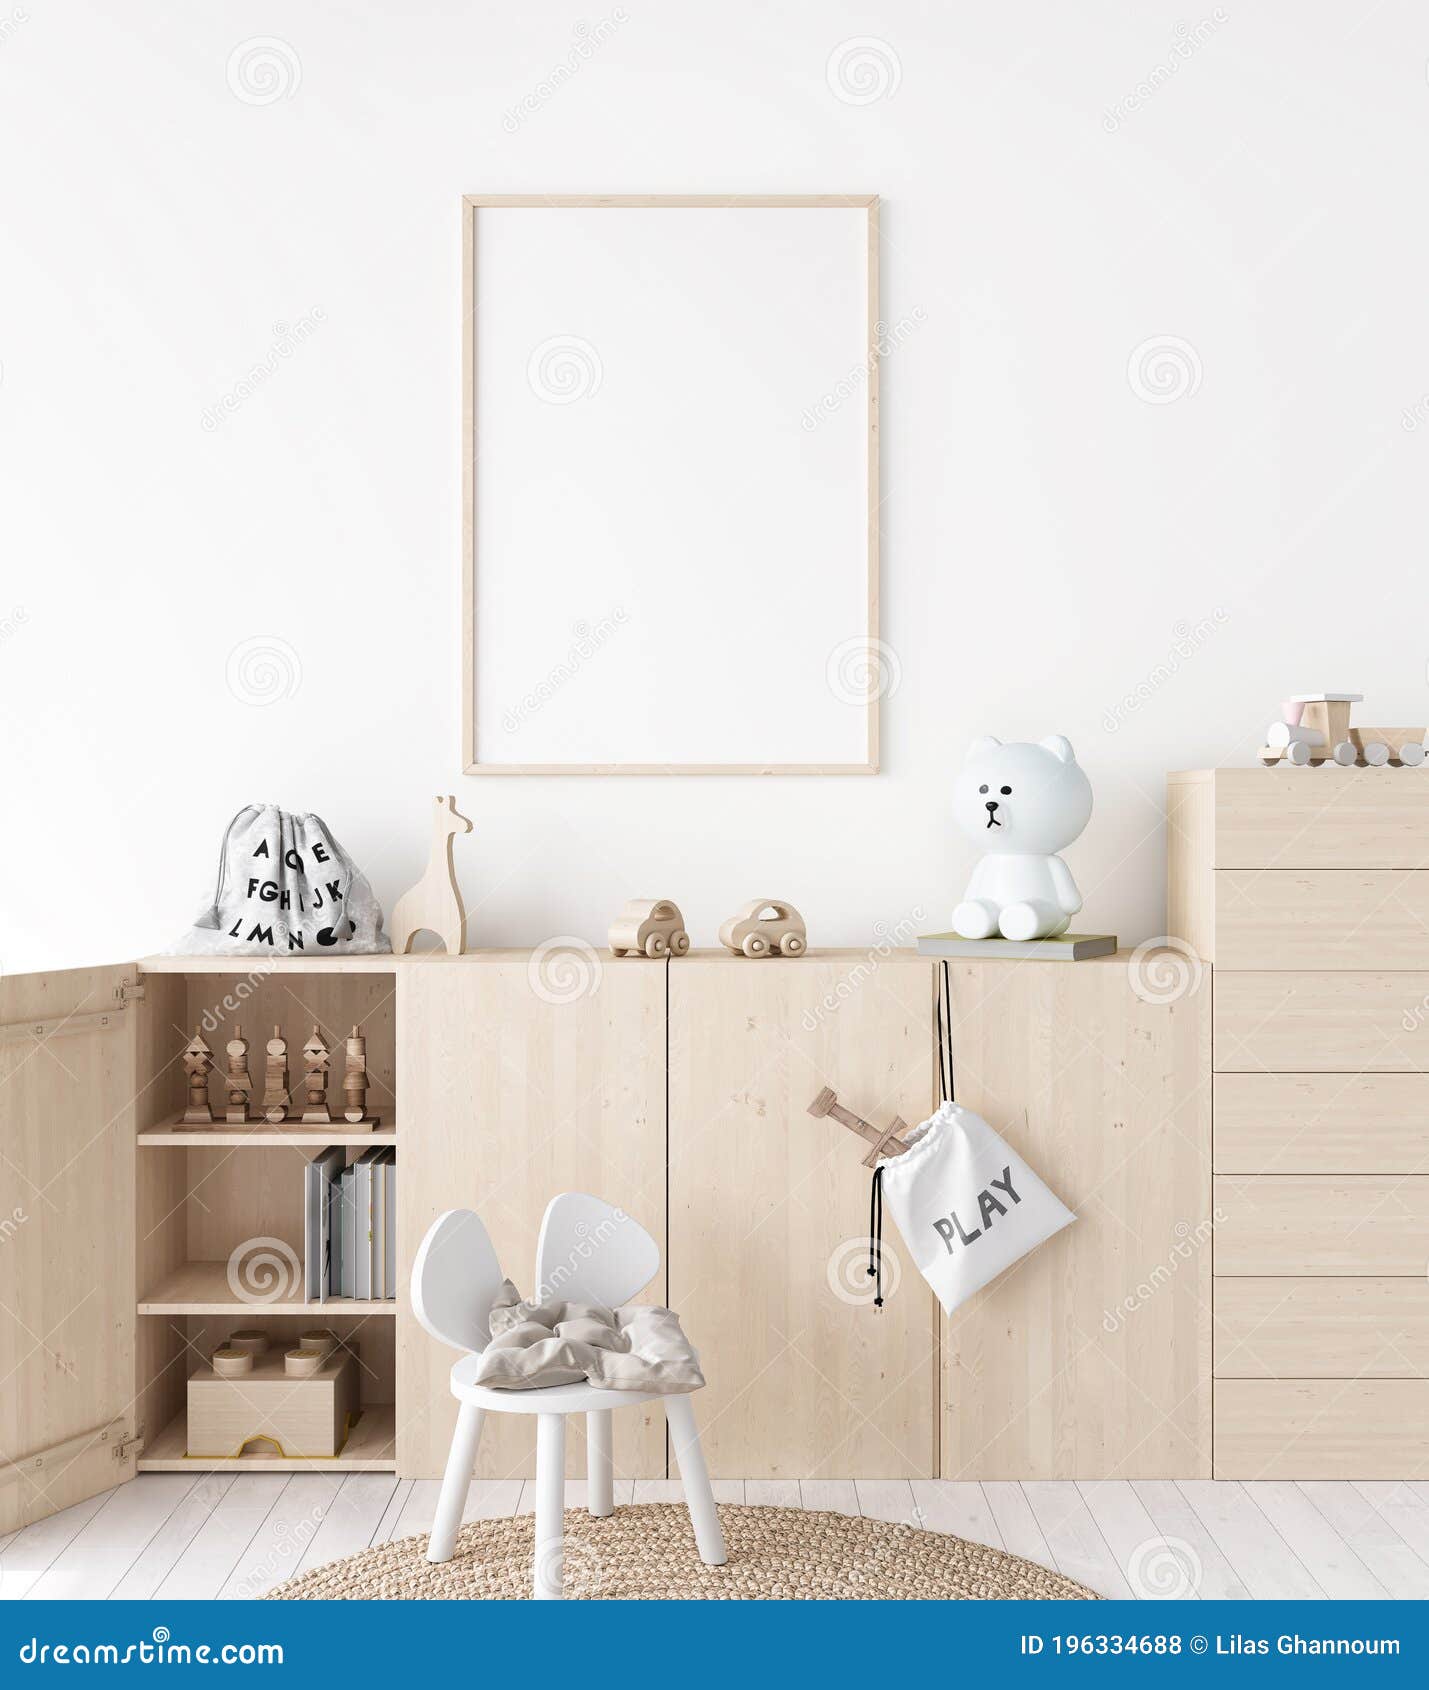 mockup frame in minimal unisex child bedroom with natural wooden furniture